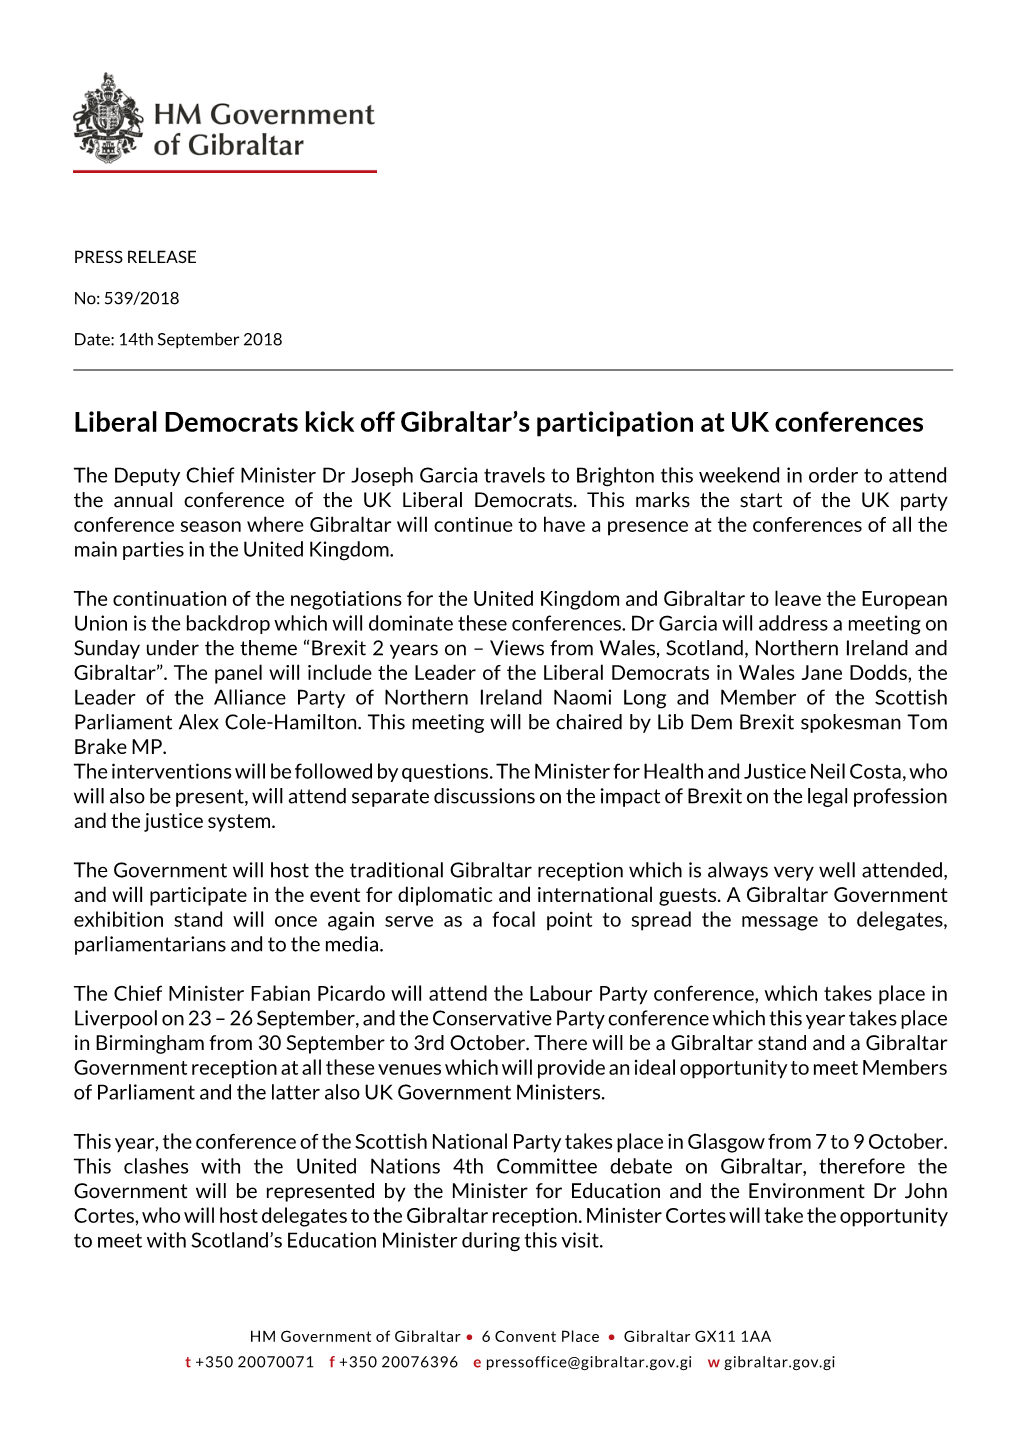 Liberal Democrats Kick Off Gibraltar's Participation at UK Conferences